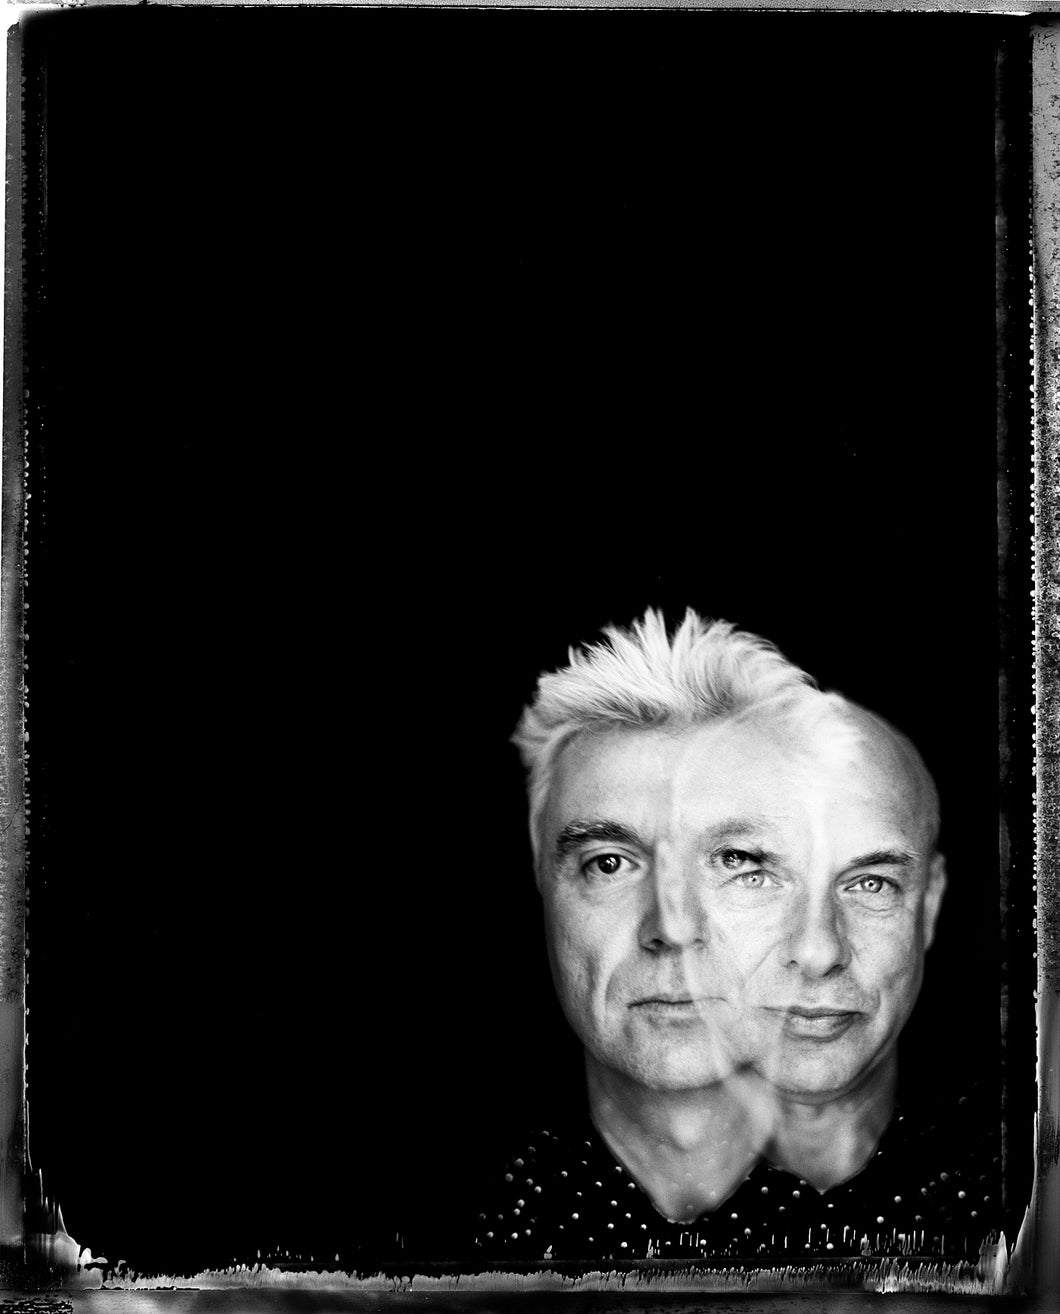 David Byrne and Brian Eno (New York City, 2008)